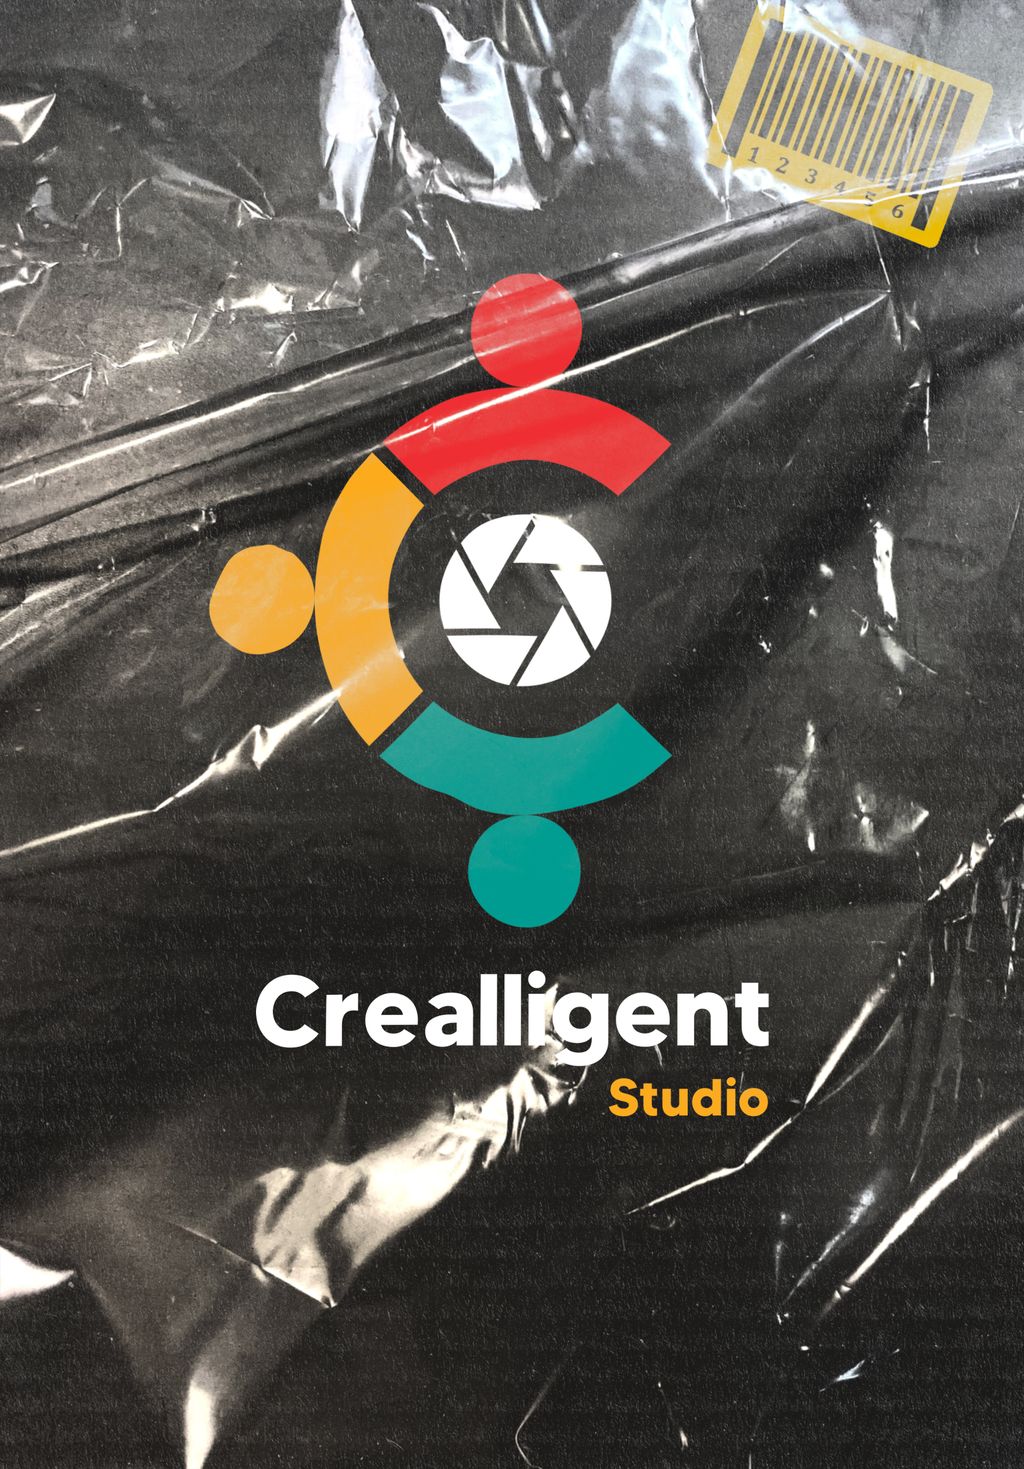 Crealligent Studio LLC